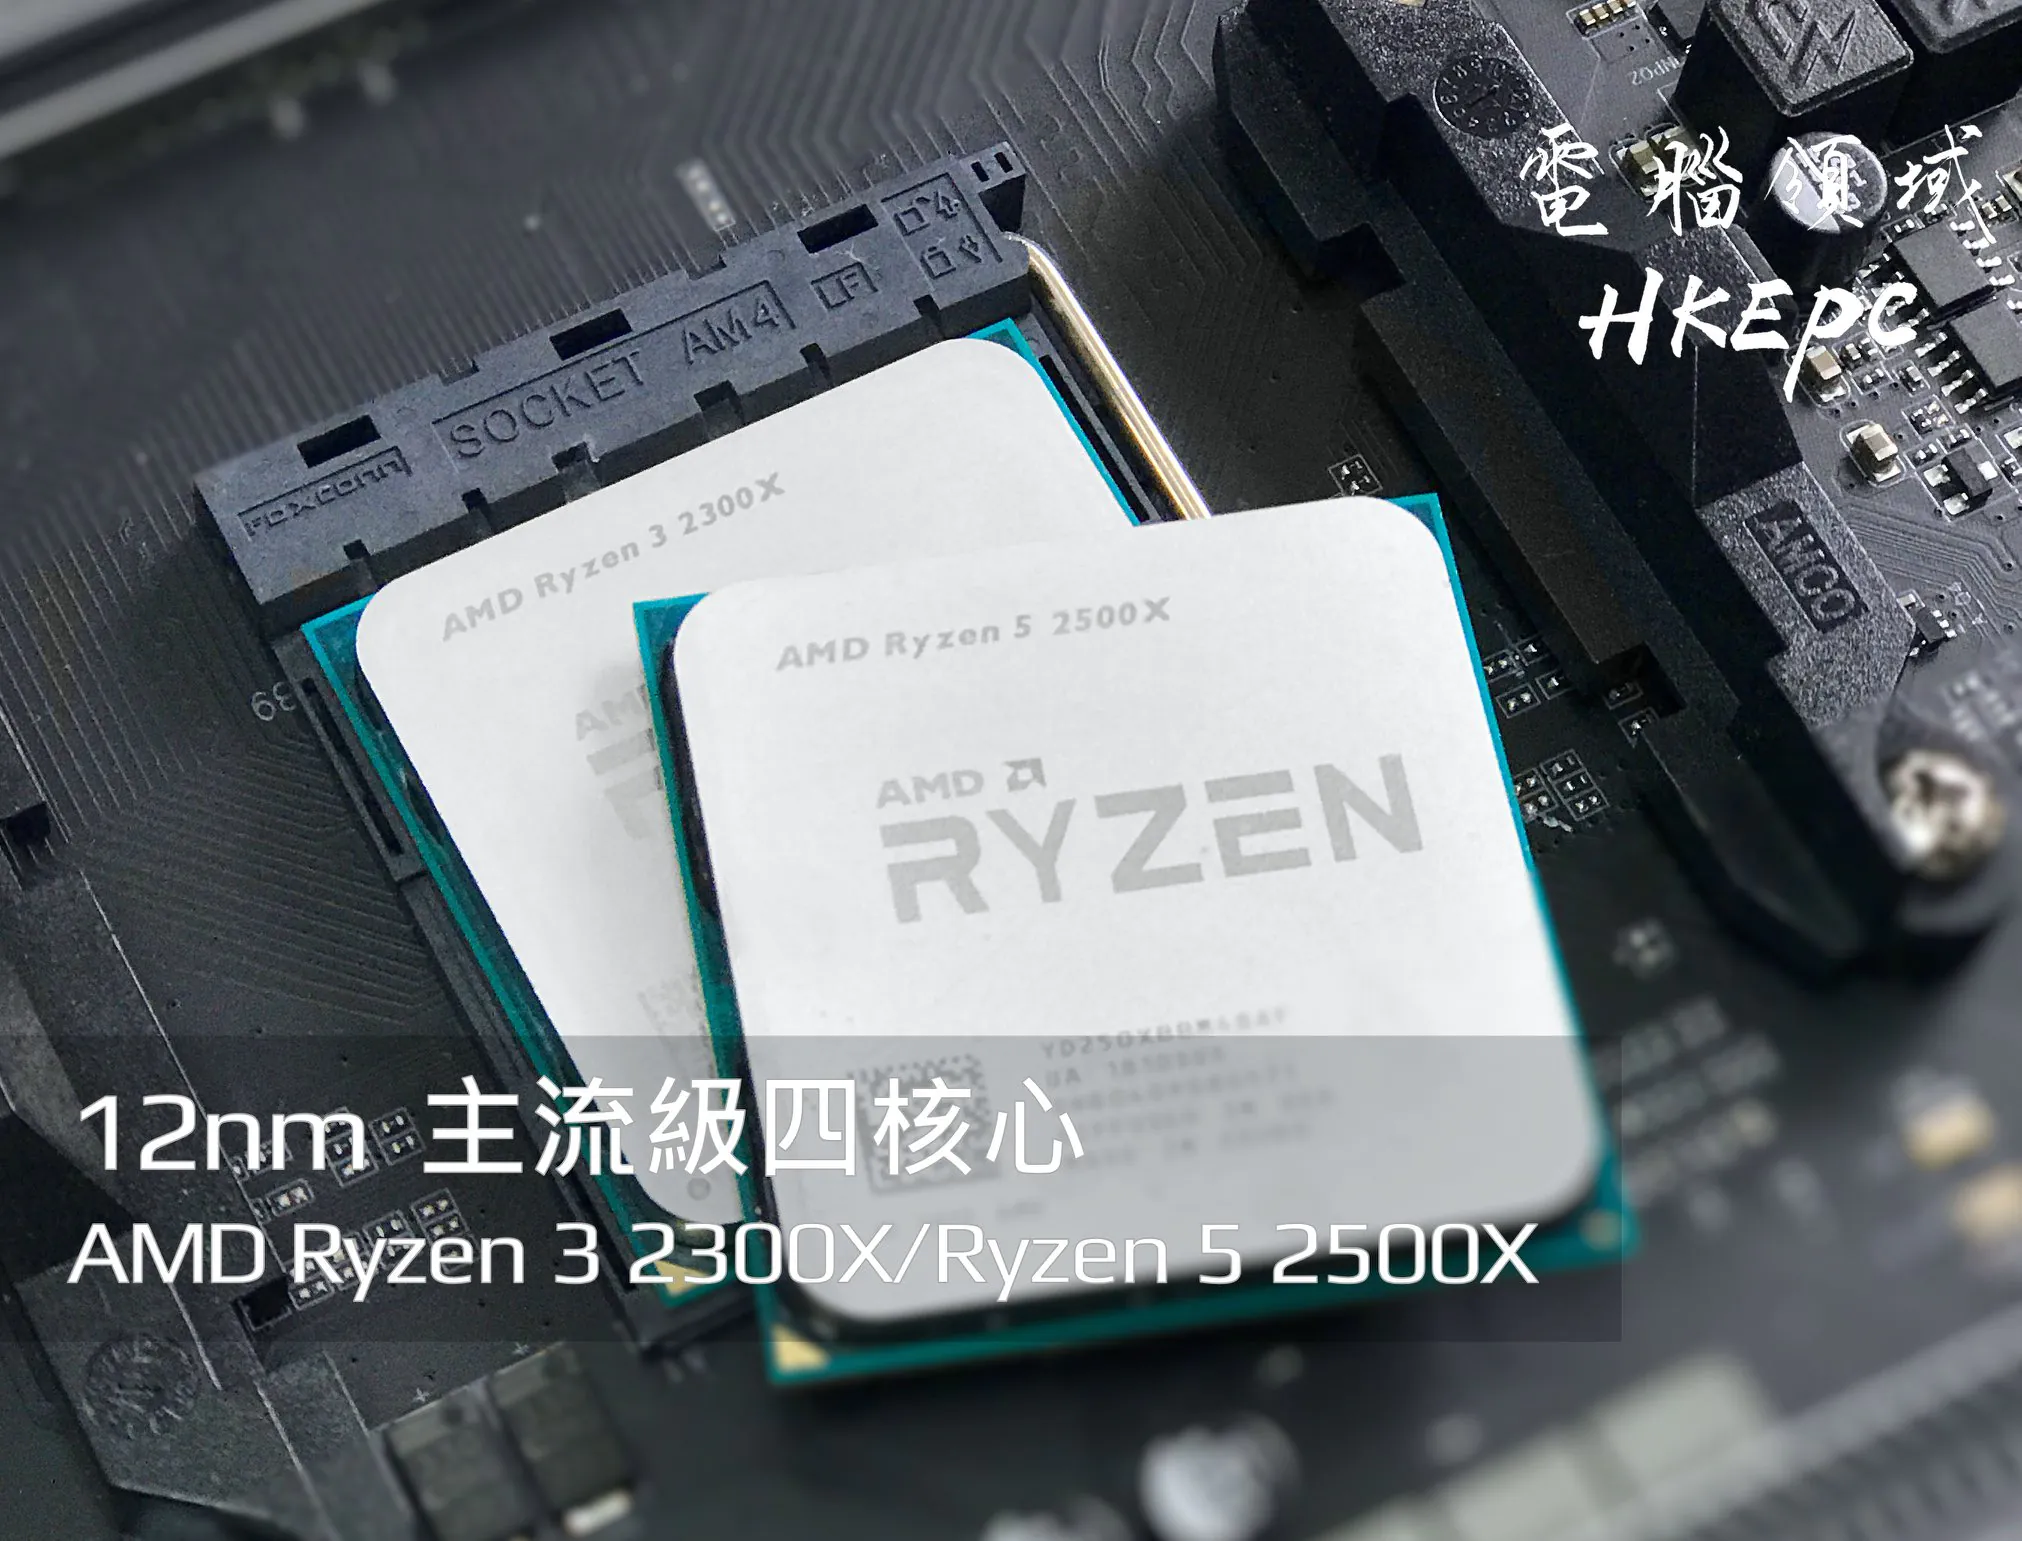 AMD Ryzen 2500X 2300X